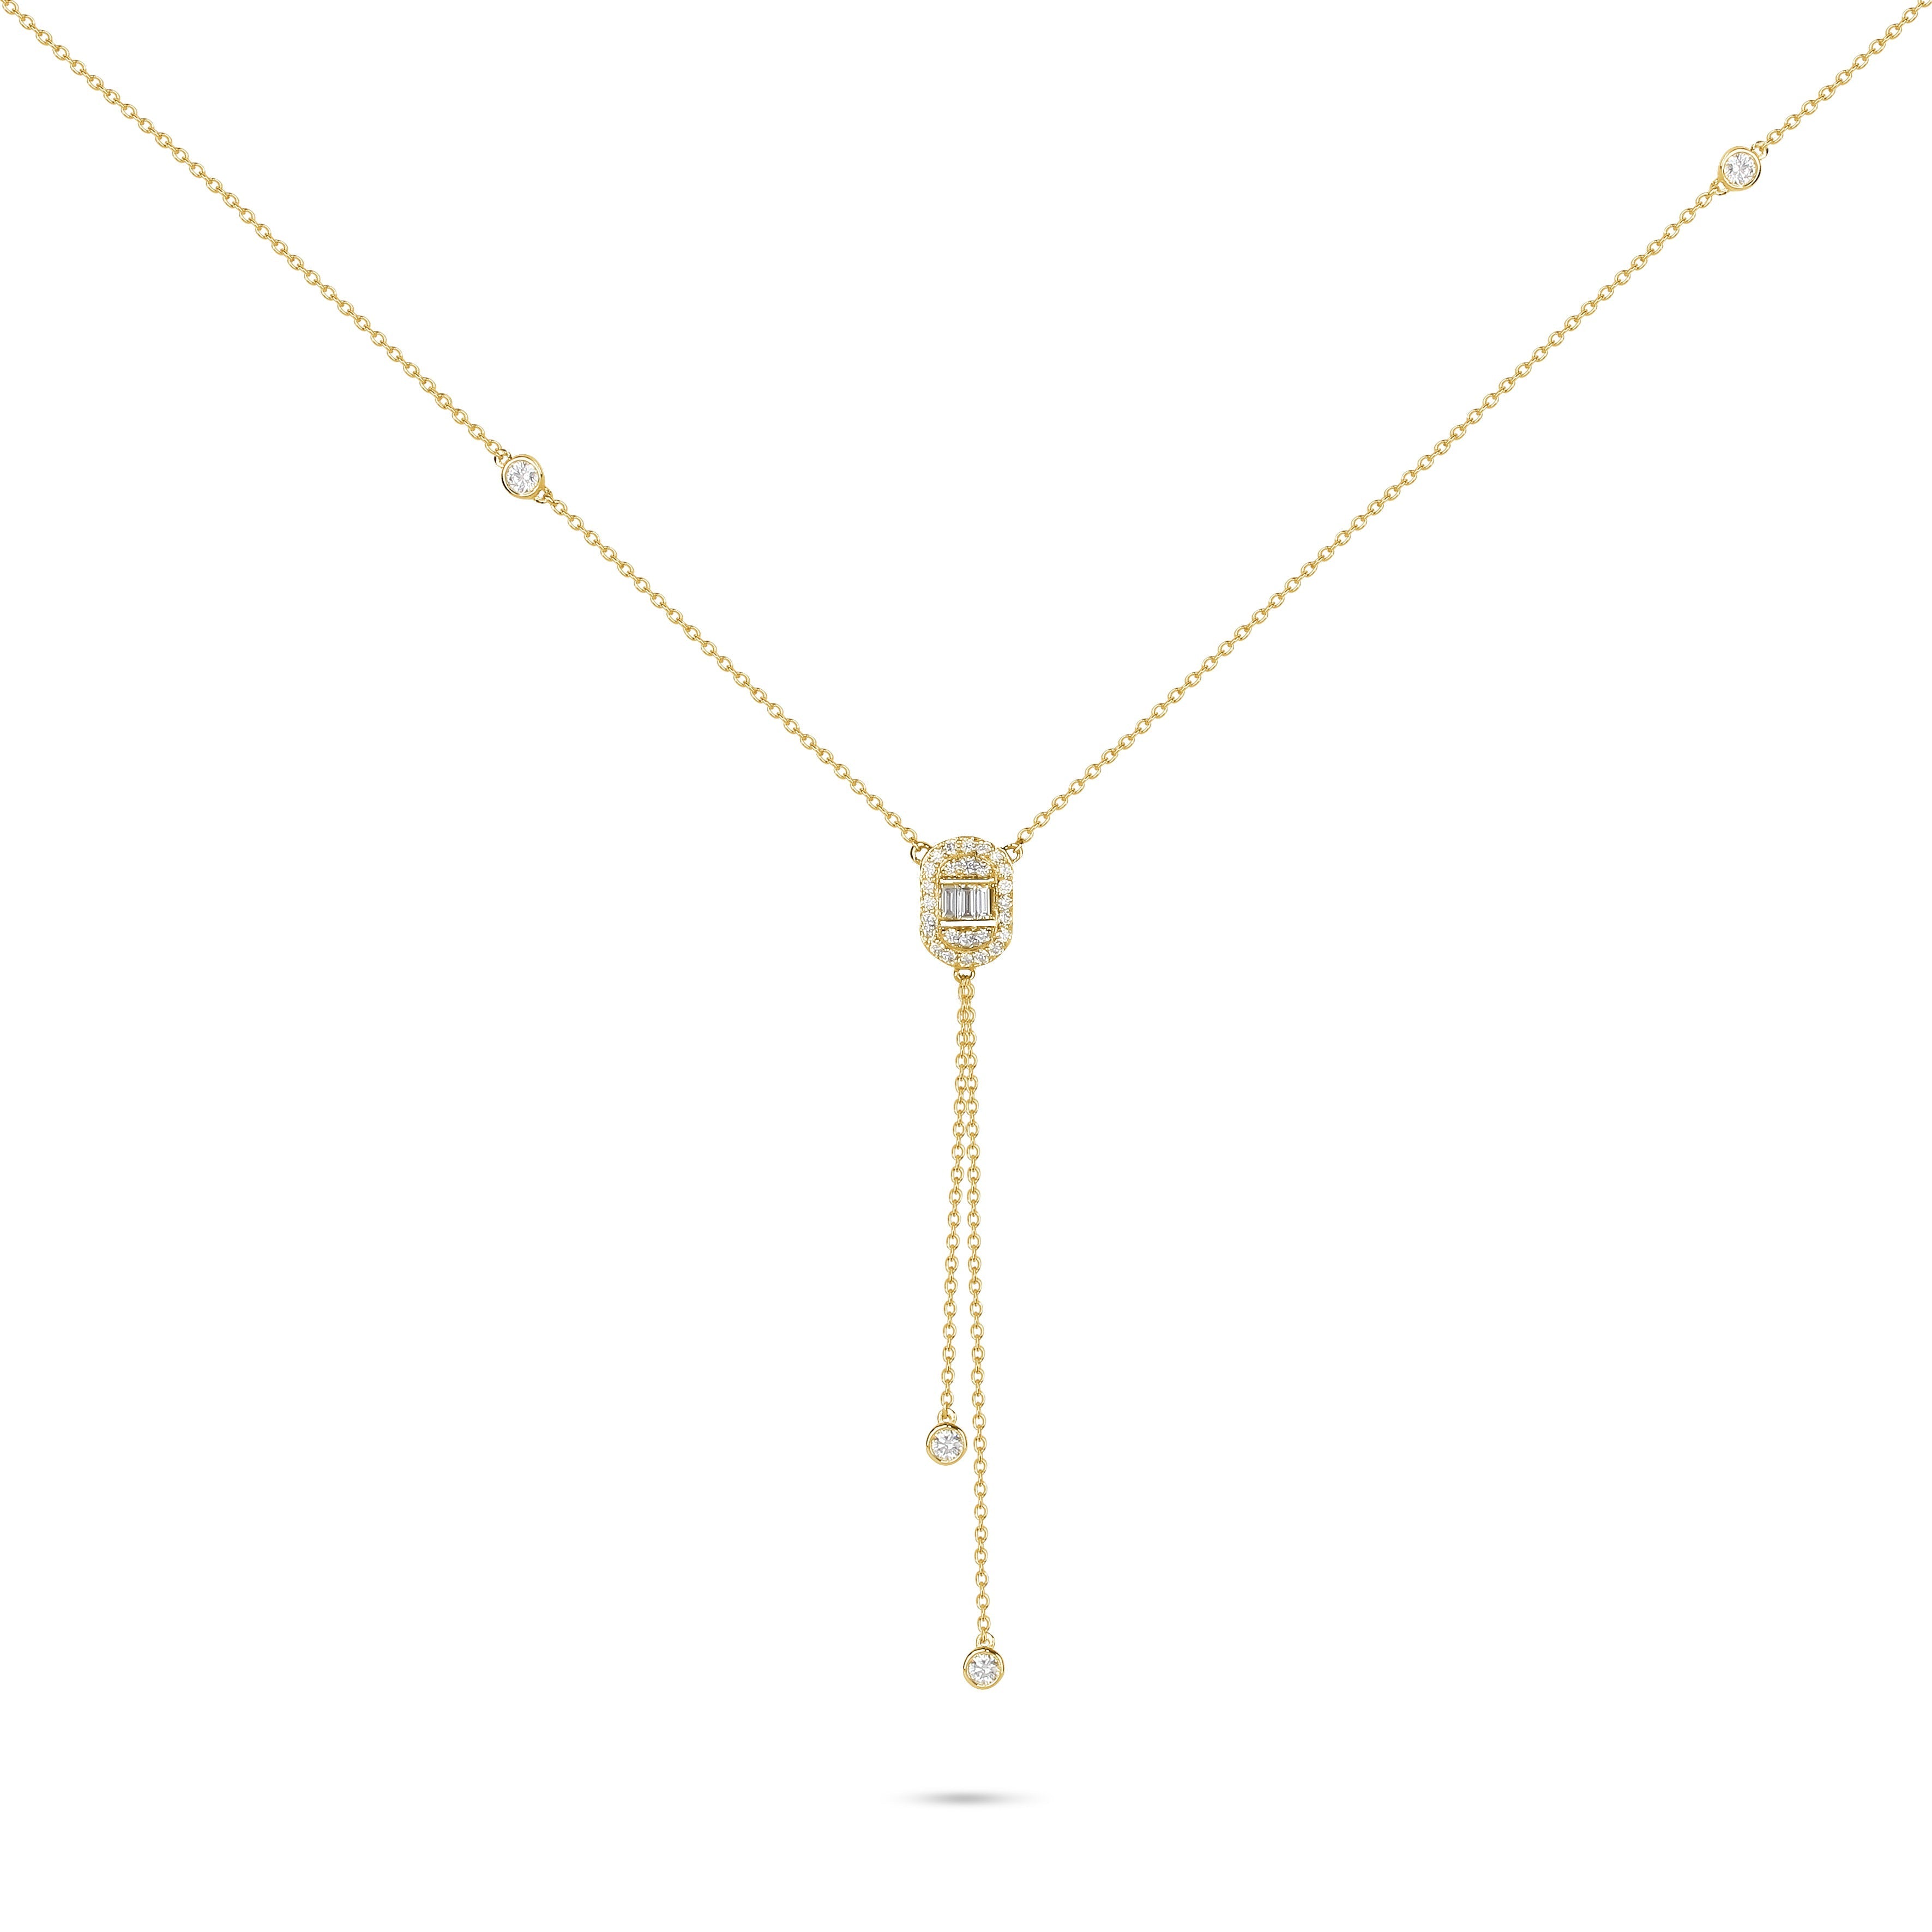 Yessayan 18K Yellow Gold Diamond Lavalier Necklace